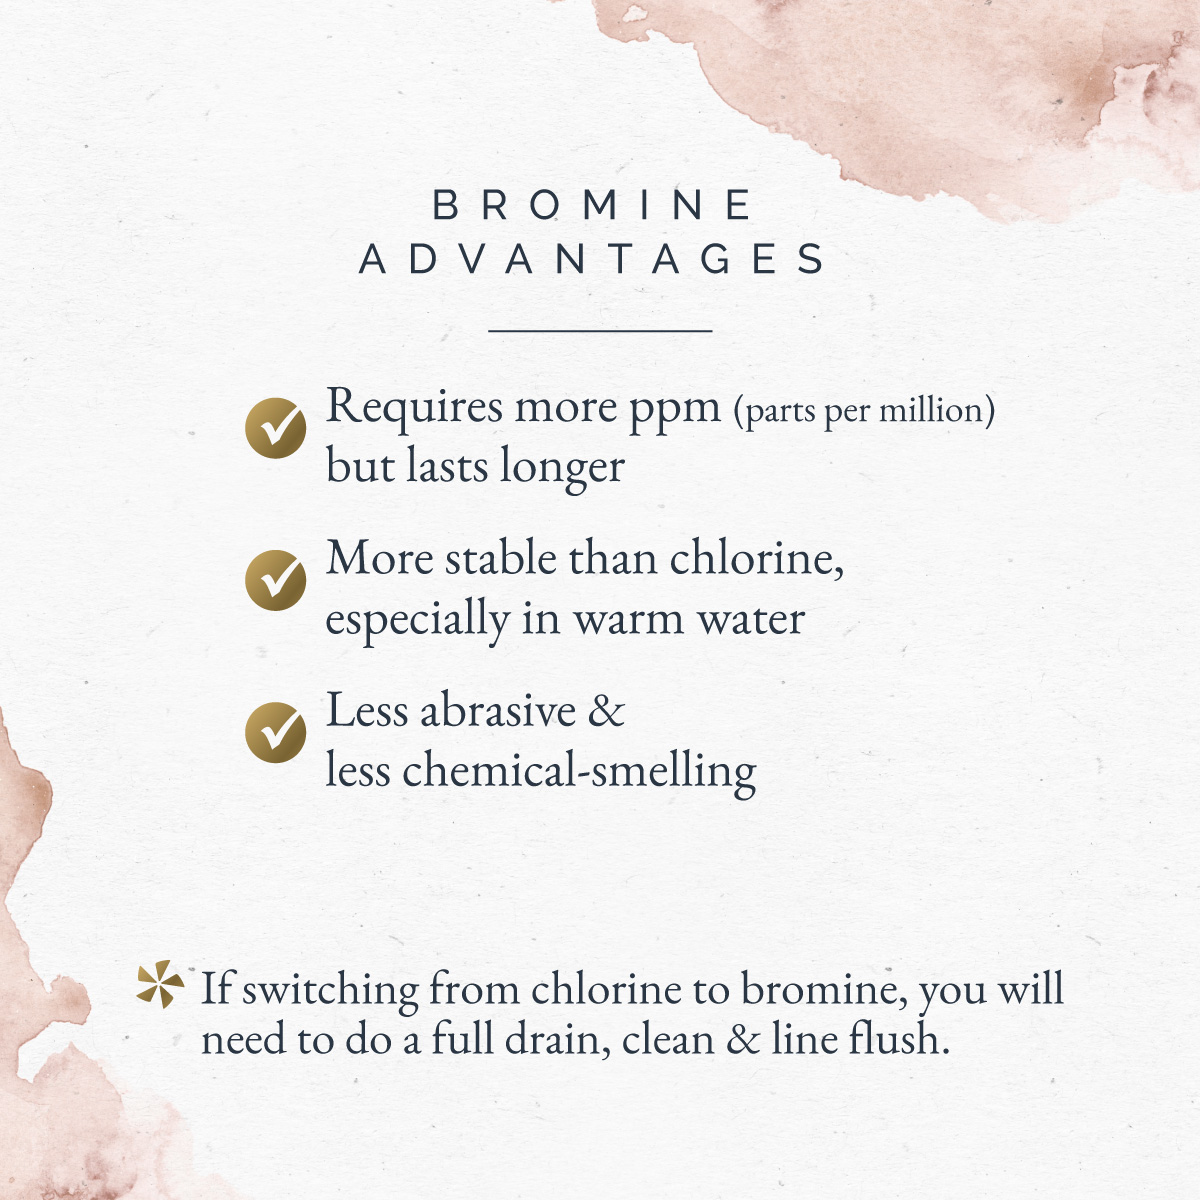 Bromine advantage chart